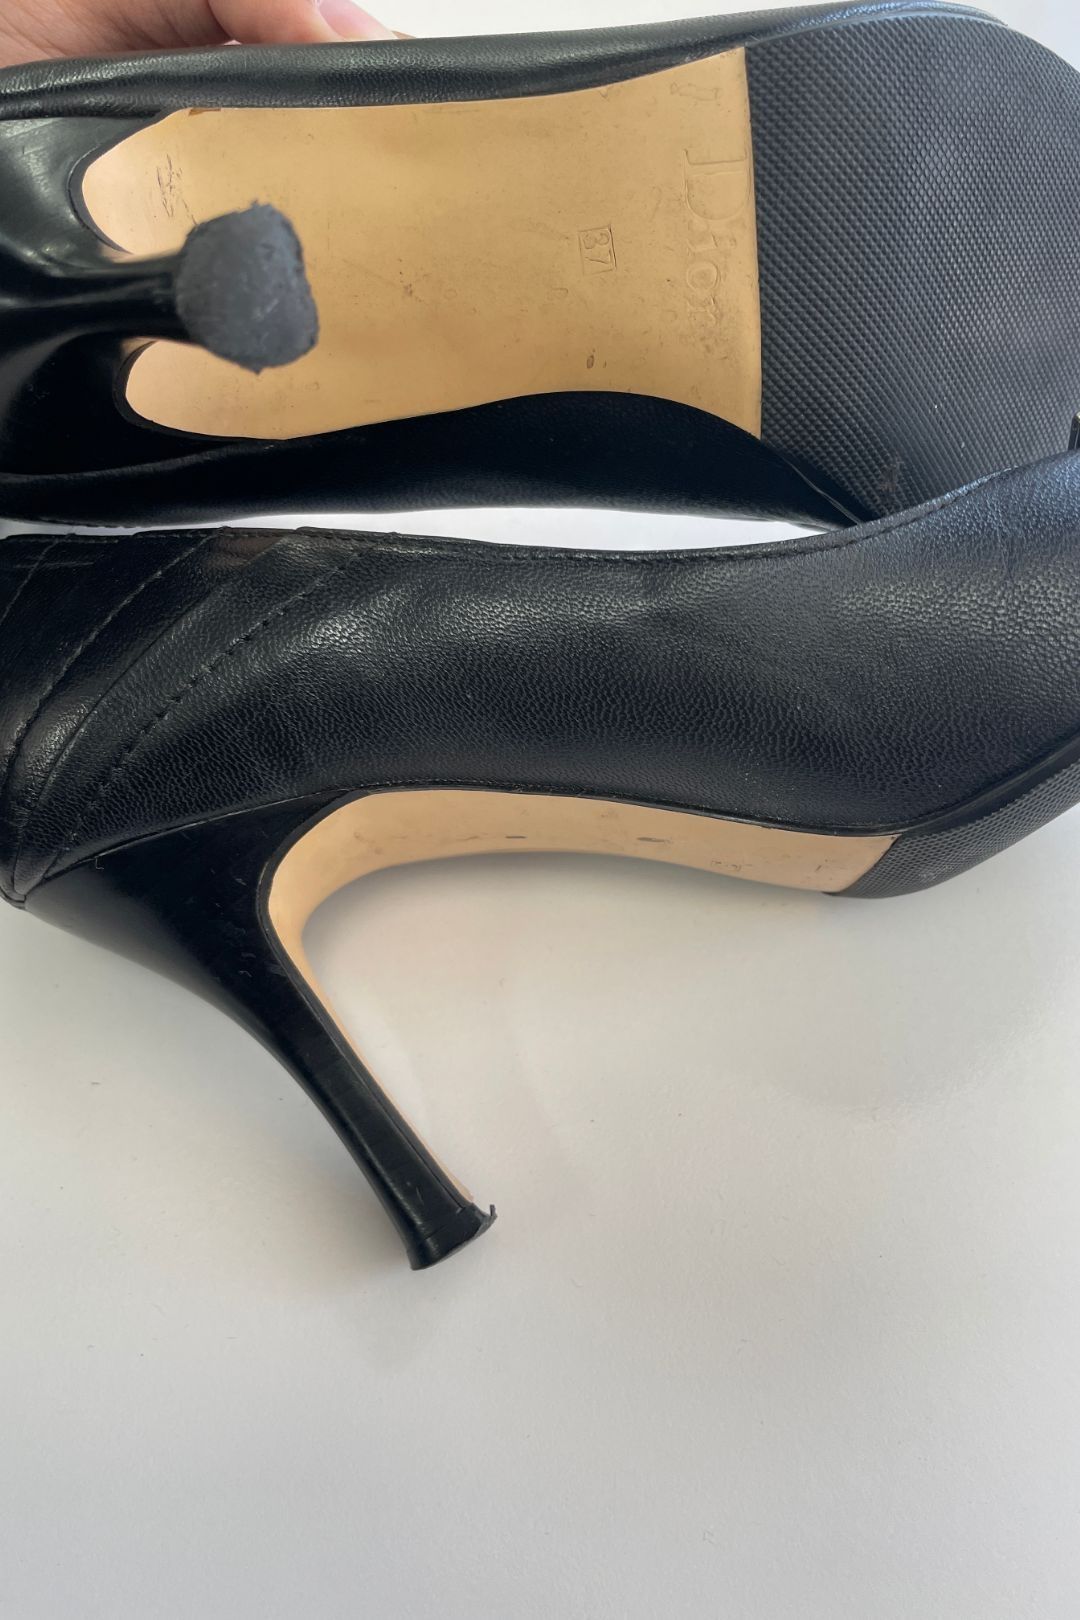 Buy Peep-Toe Black Stiletto Heels | Dior | GlamCorner